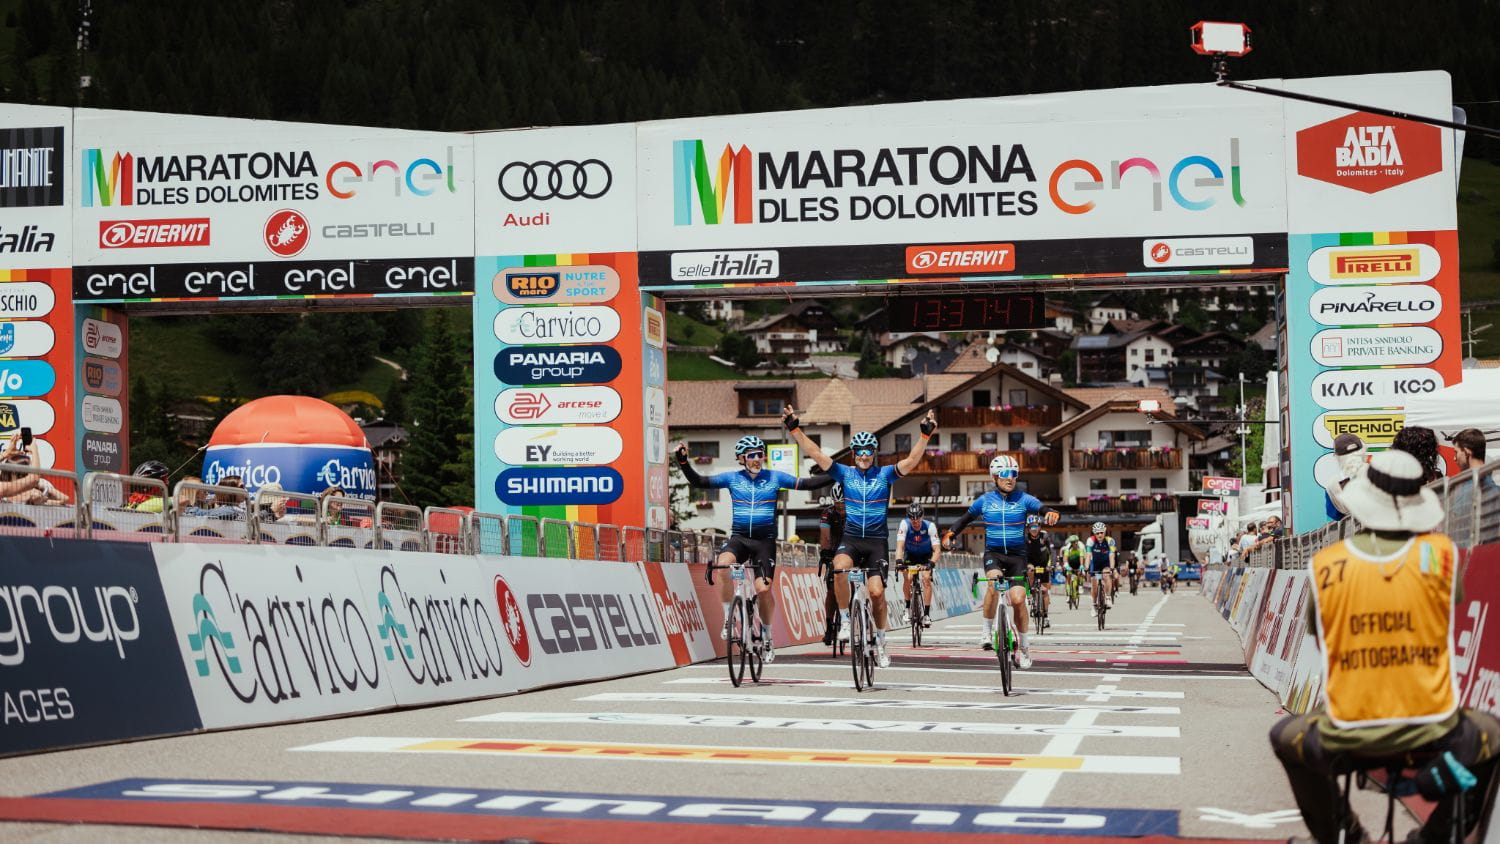 Maratona-dles-Dolomites-Bike-Tour-Finish-Line